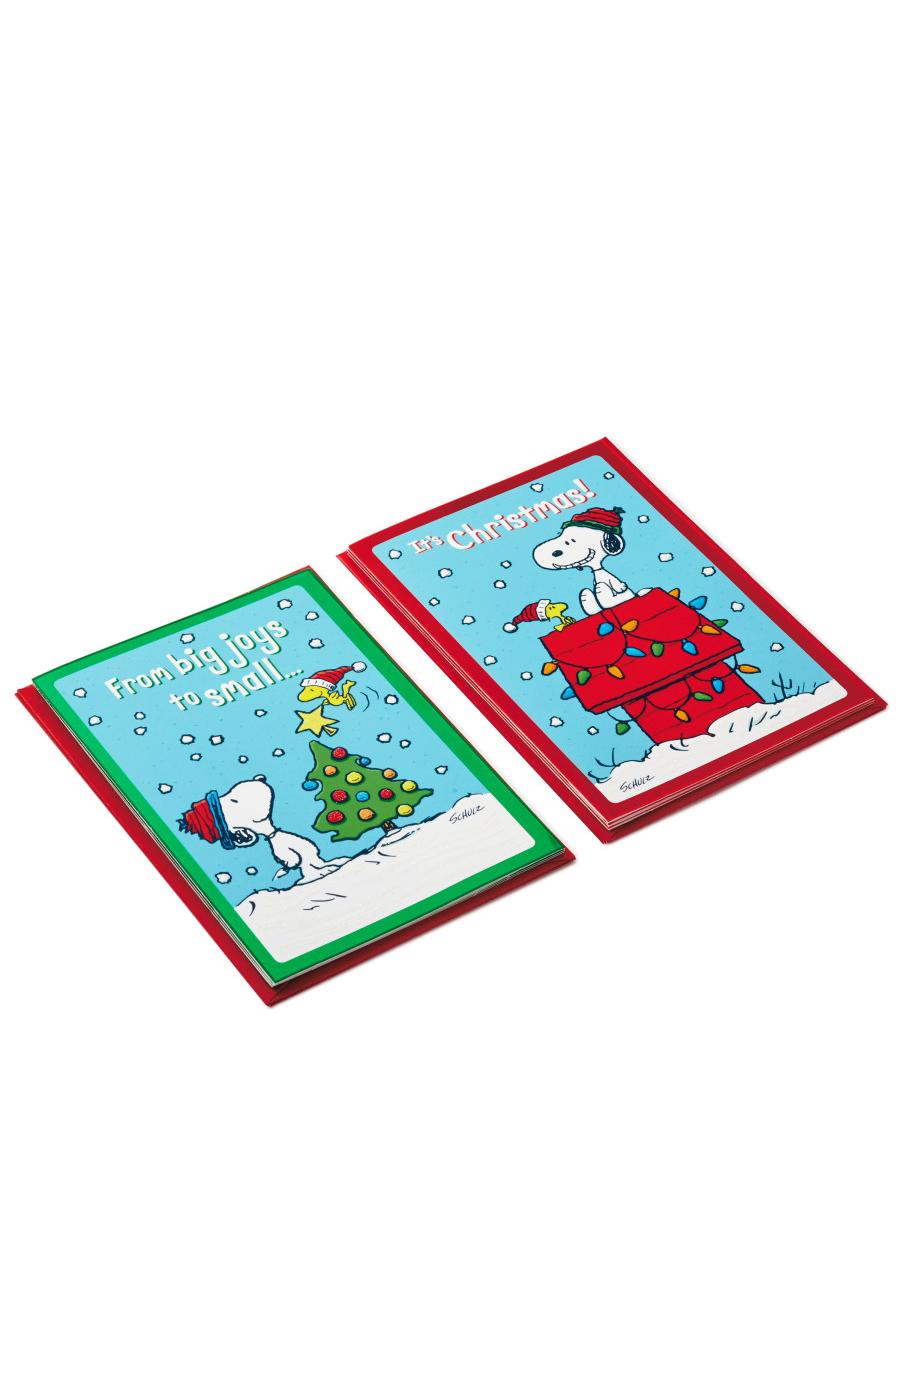 Hallmark Christmas Cards Peanuts Assortment; image 6 of 7